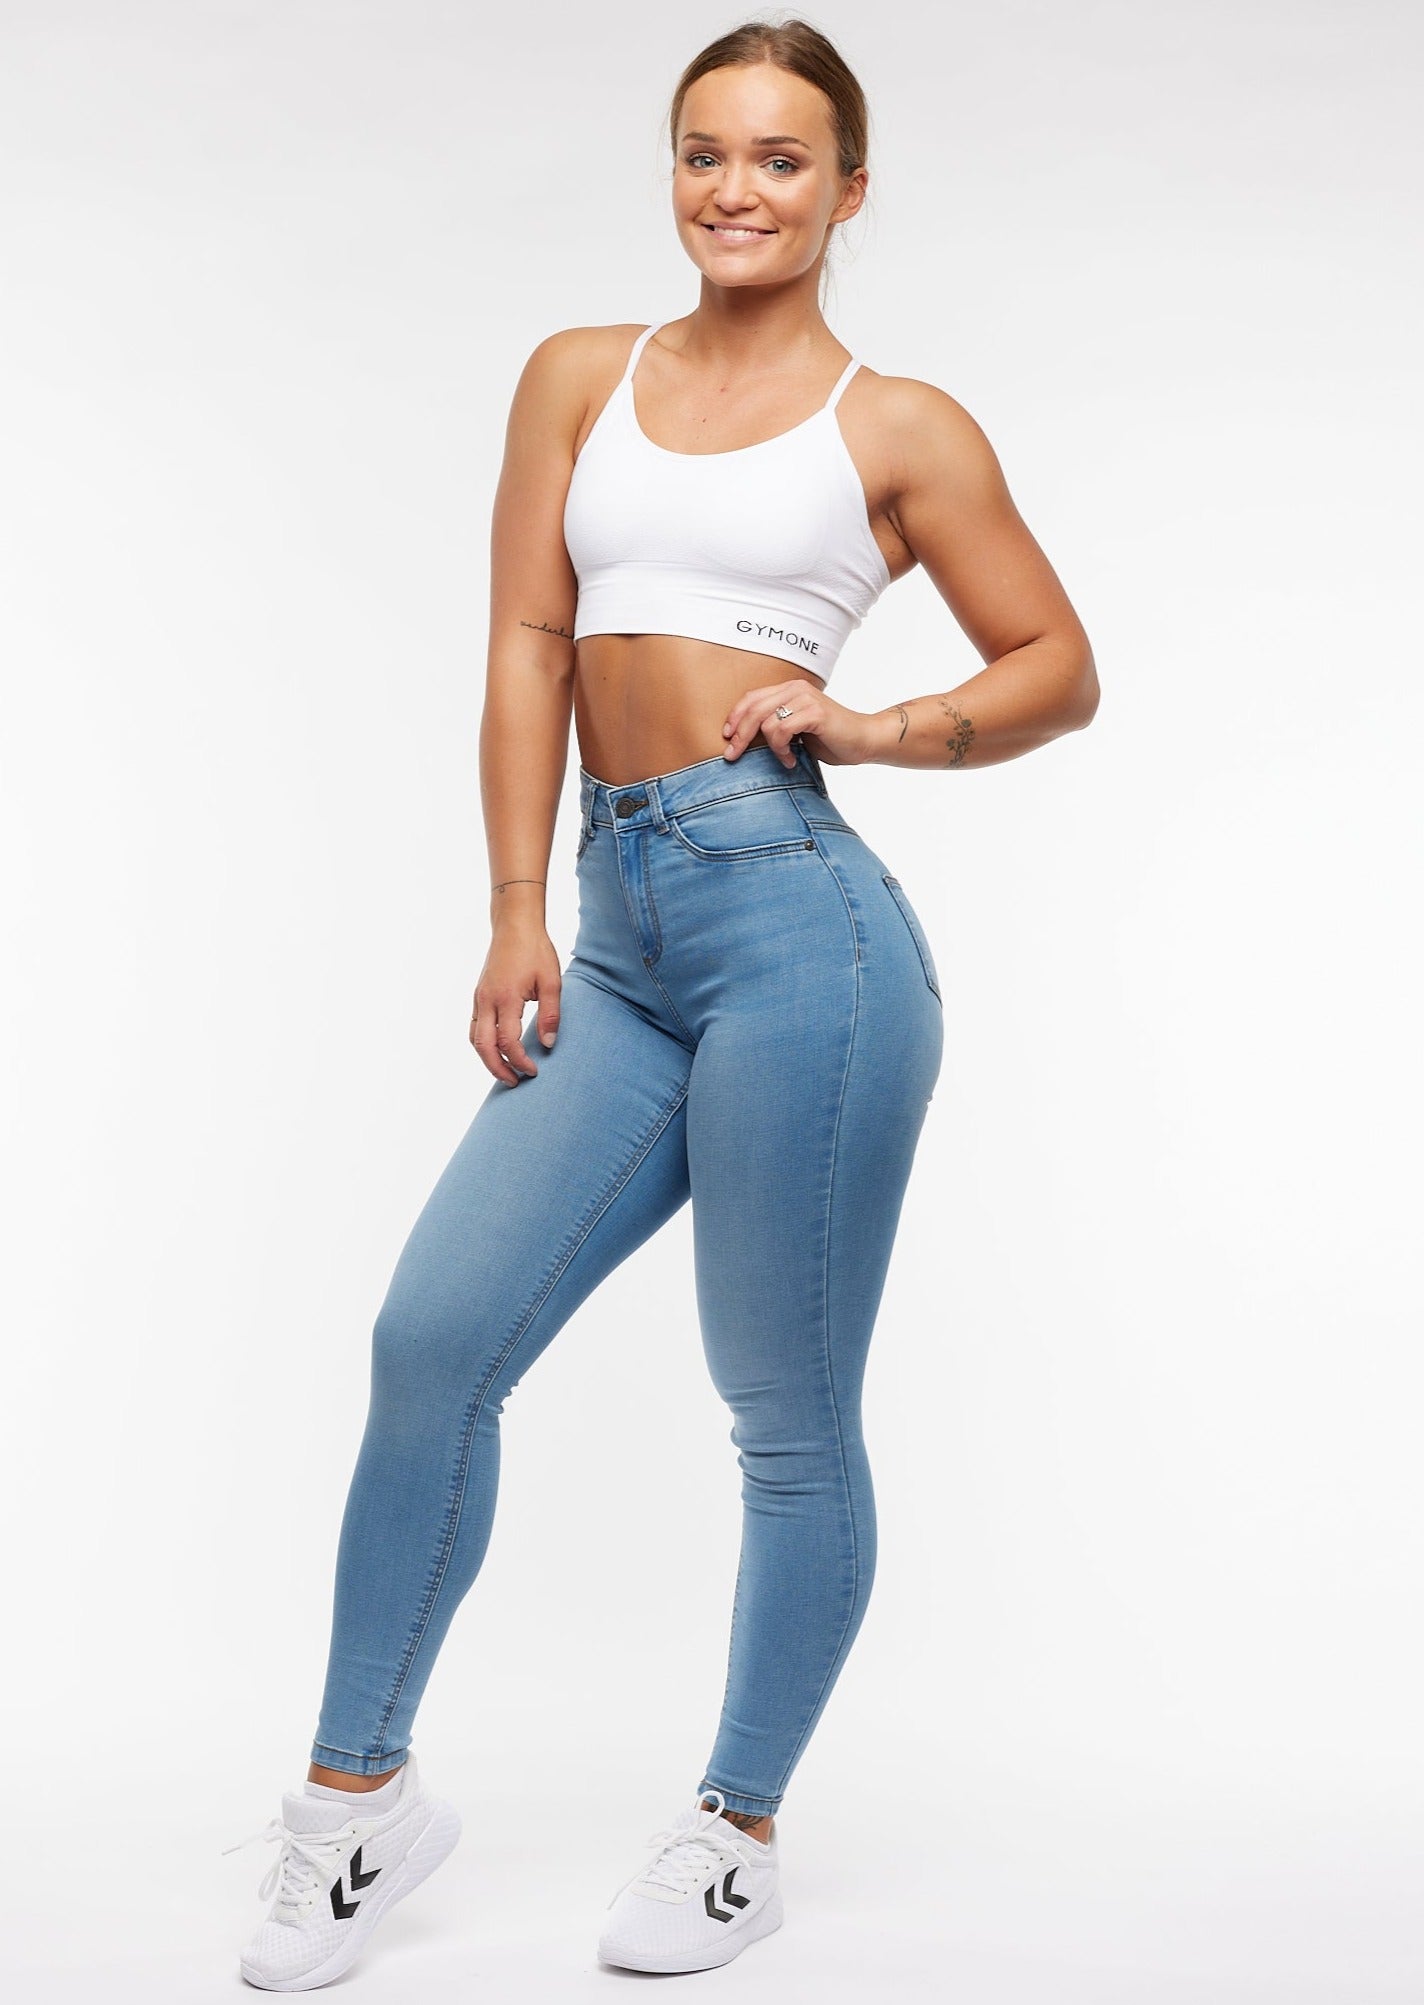 Callie Skinny Jeans - Light Blue - for kvinde - NOISY MAY - Jeans